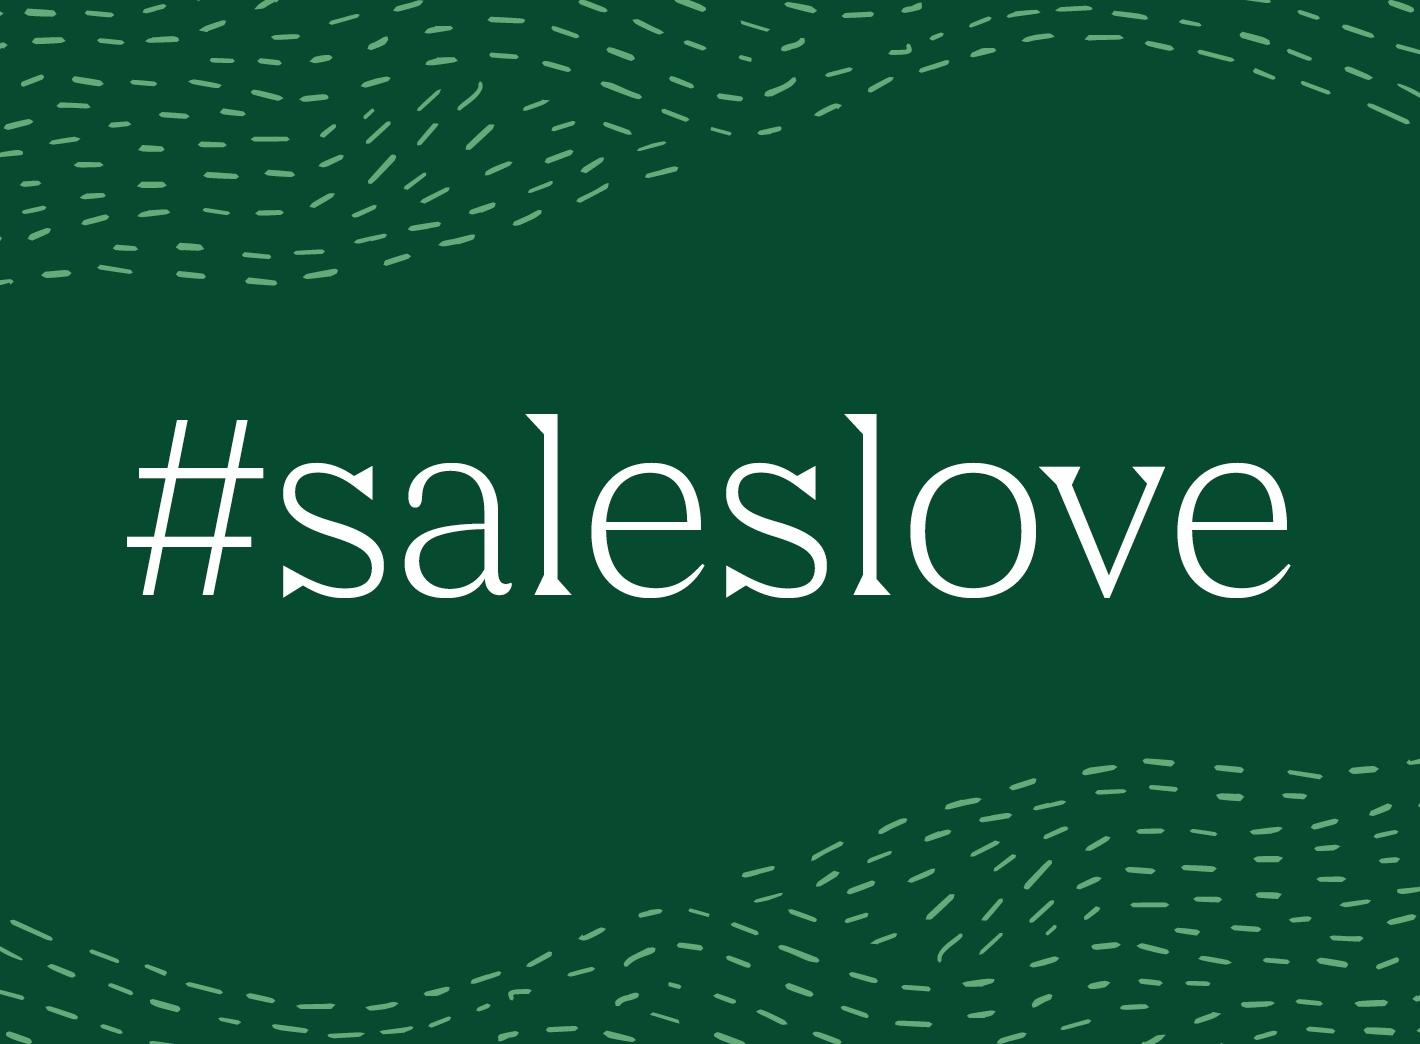 "#saleslove"